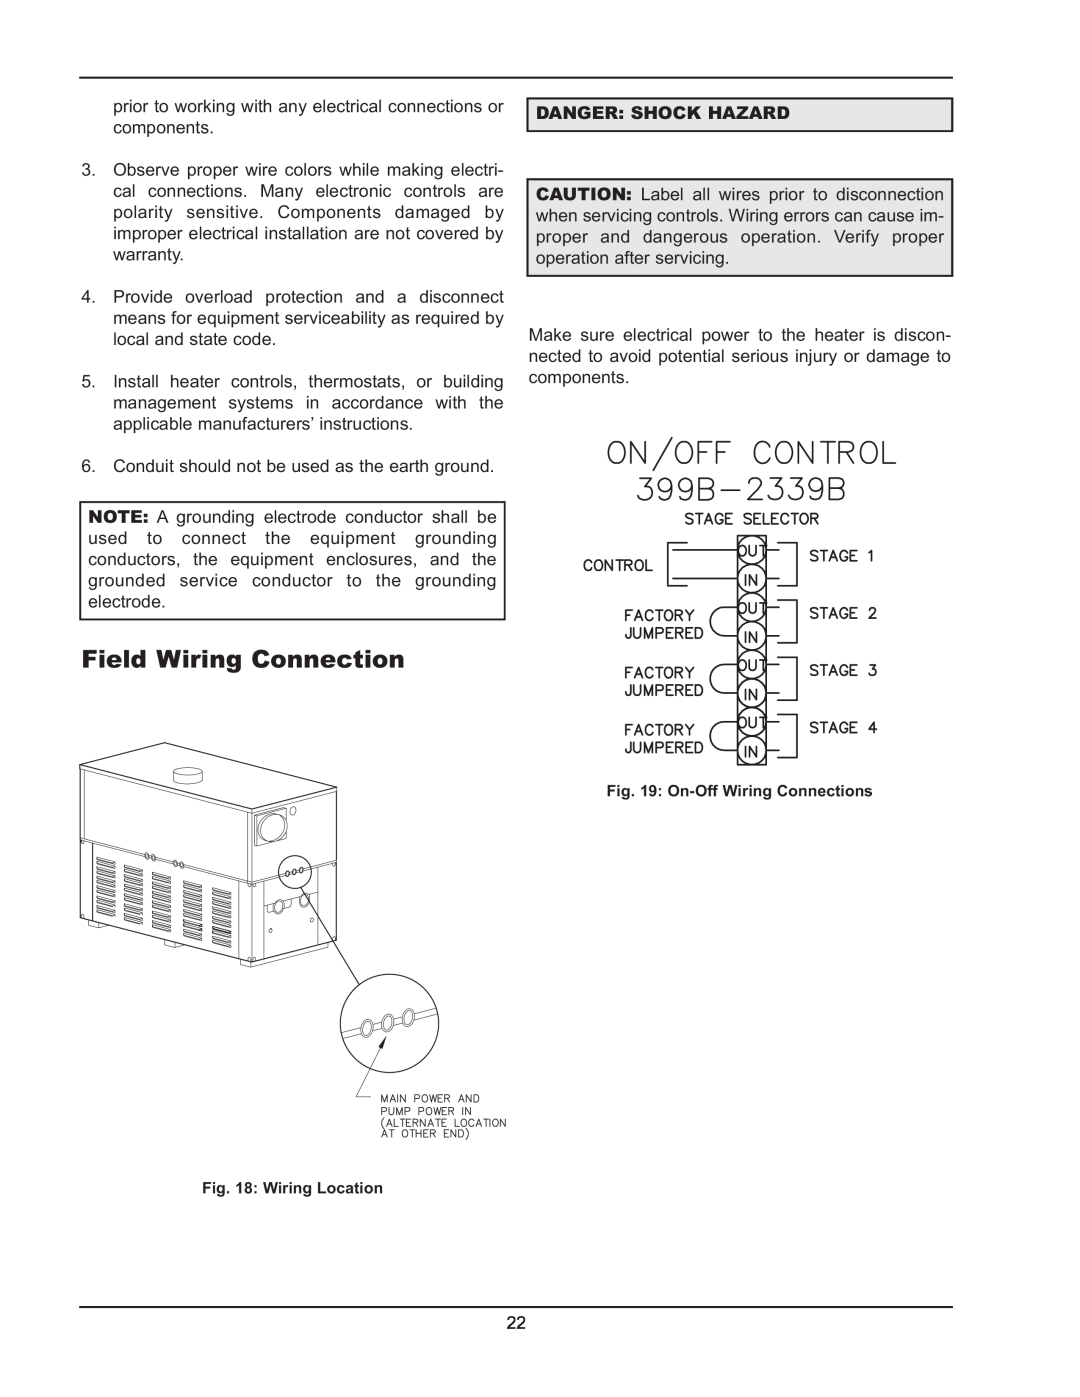 Raypak 399B-2339B operating instructions Field Wiring Connection, Danger Shock Hazard 